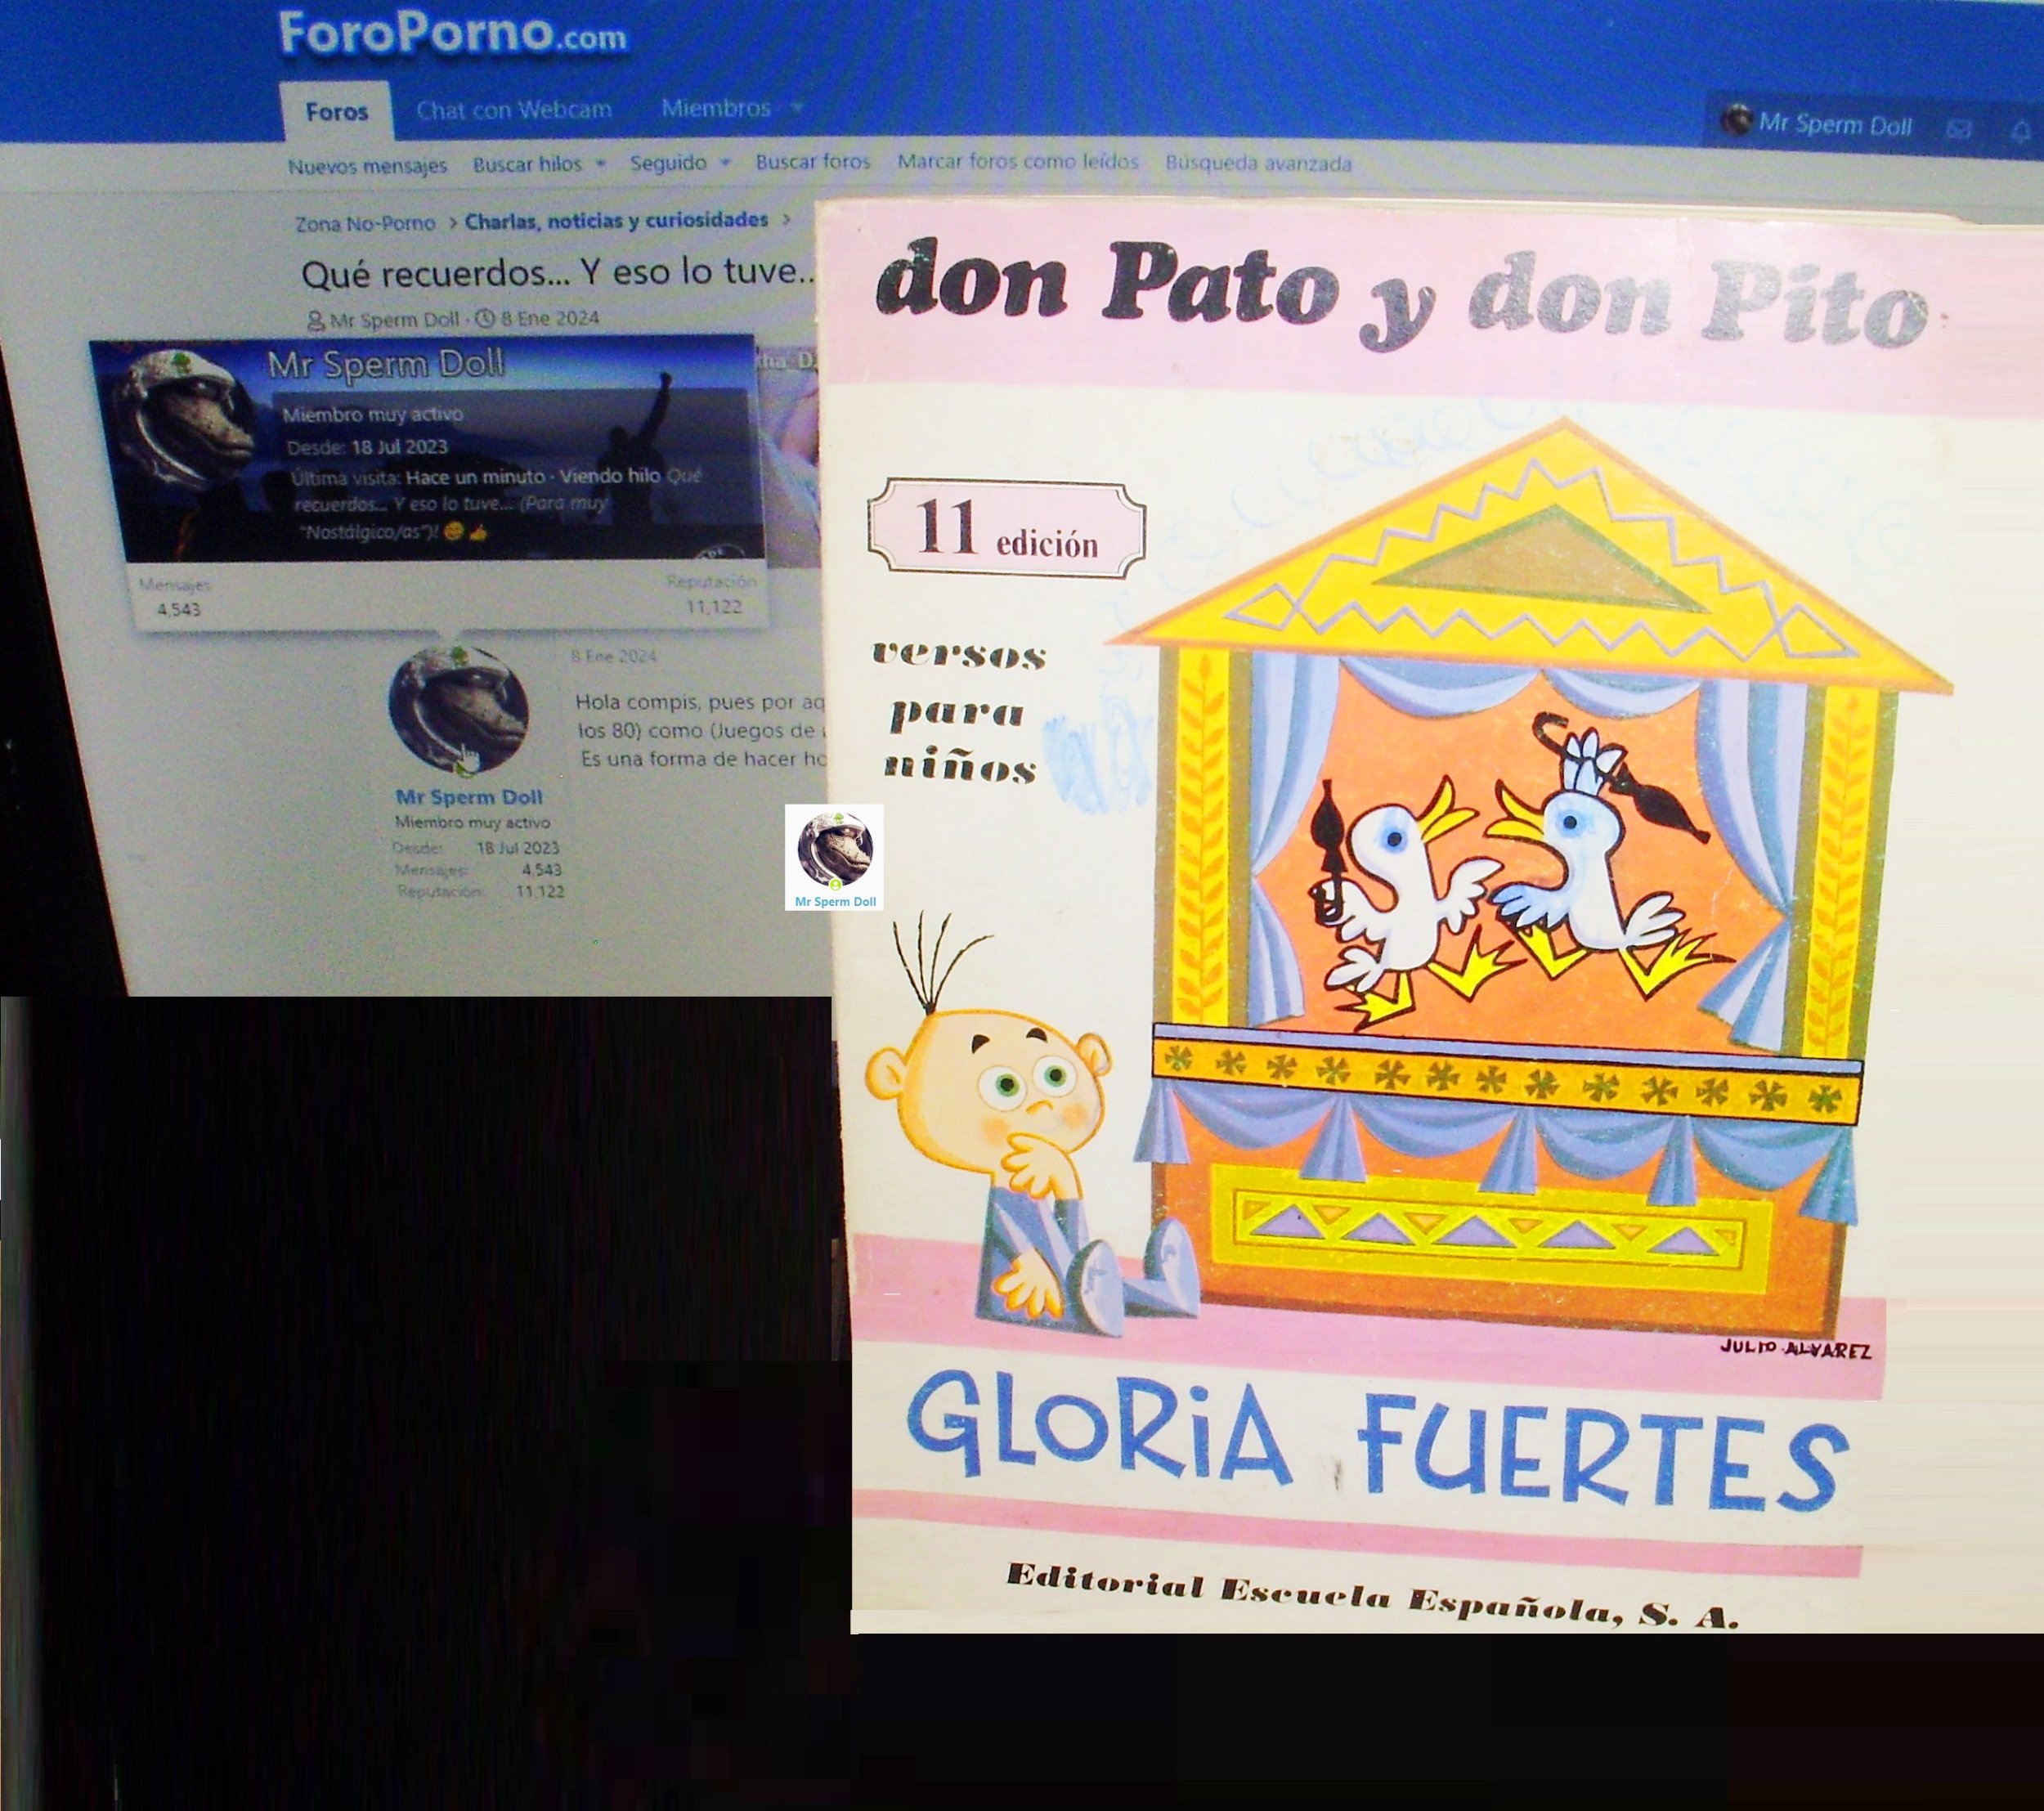 1 Gloria Fuertes Libro Don Pato y Don Pito Mr Sperm Doll.JPG